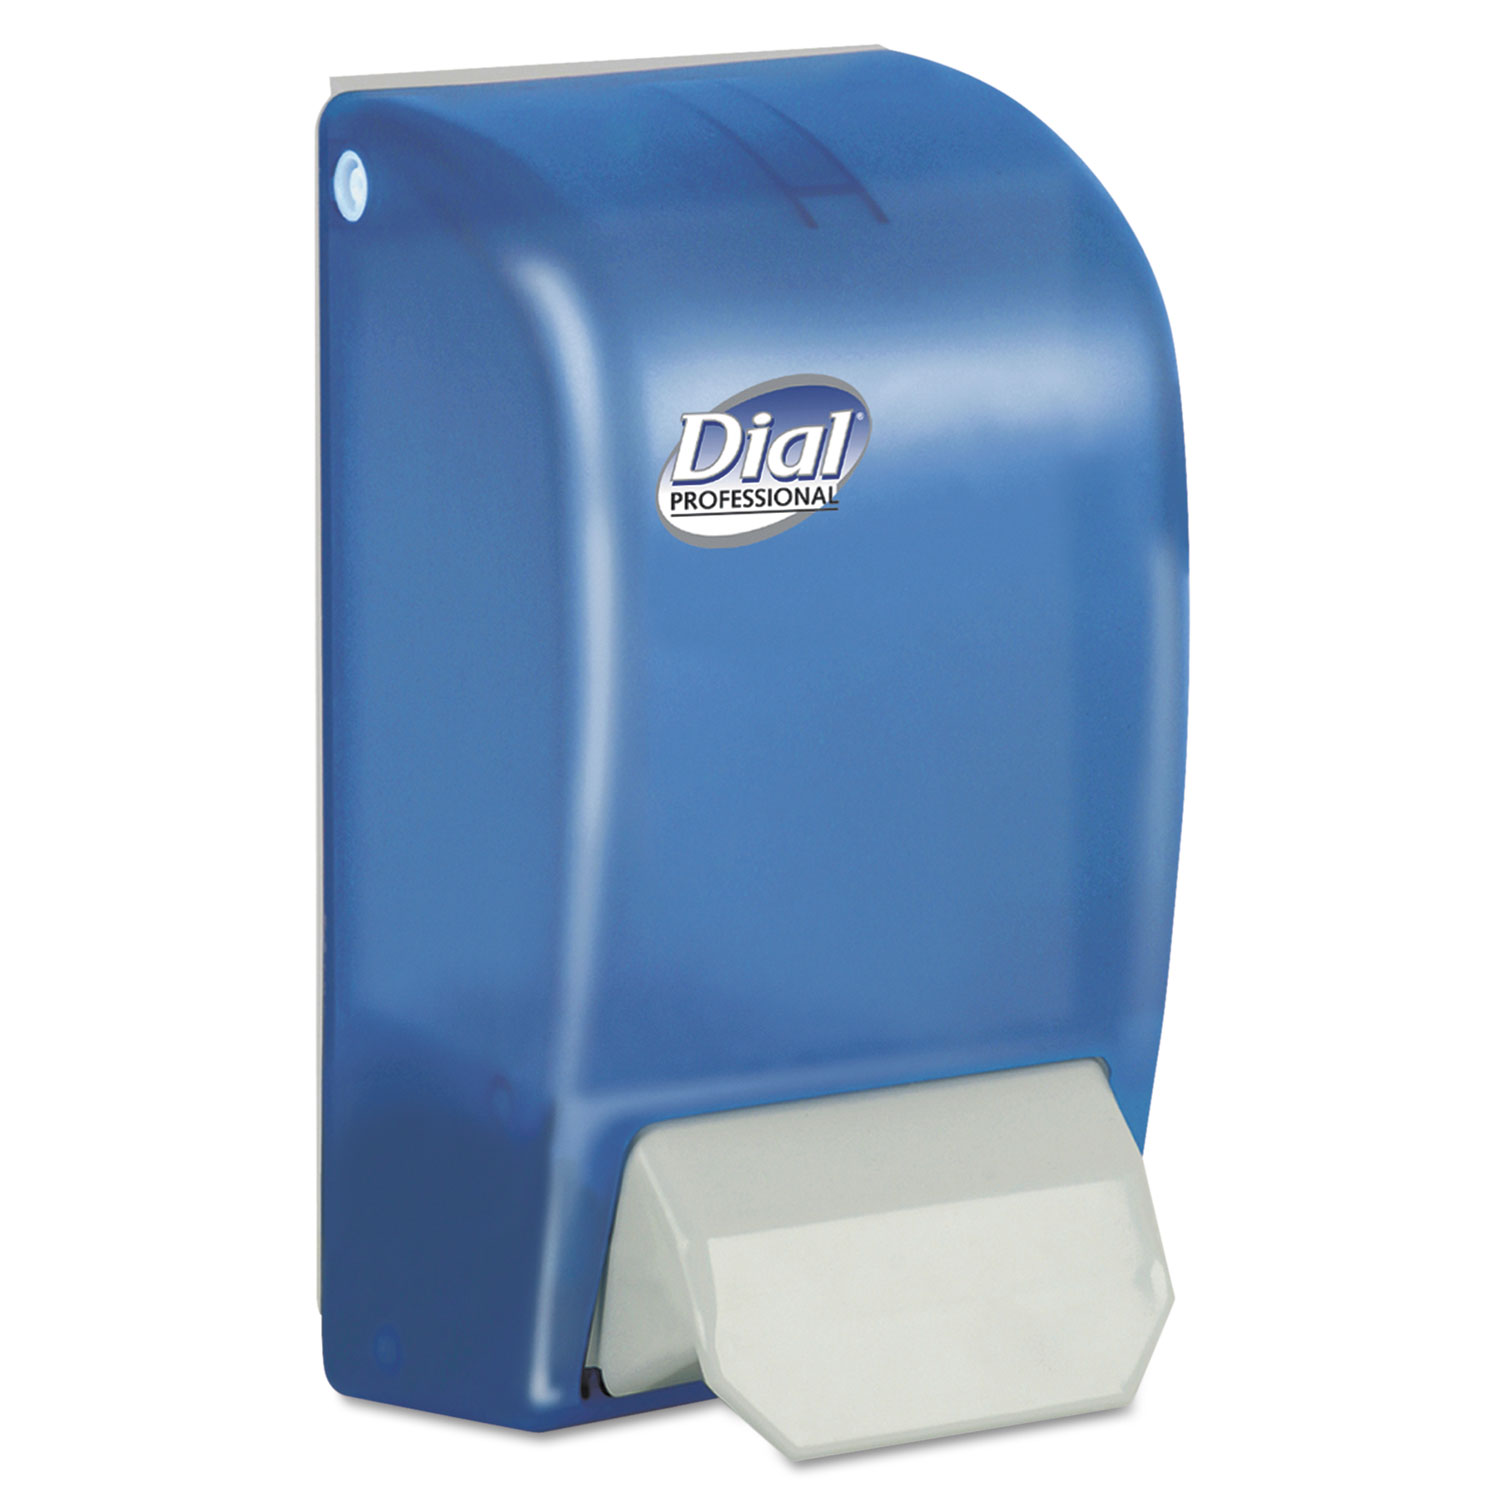  Dial Professional 6056 1 Liter Manual Foaming Dispenser, 5 x 4.5 x 9, Blue (DIA06056) 